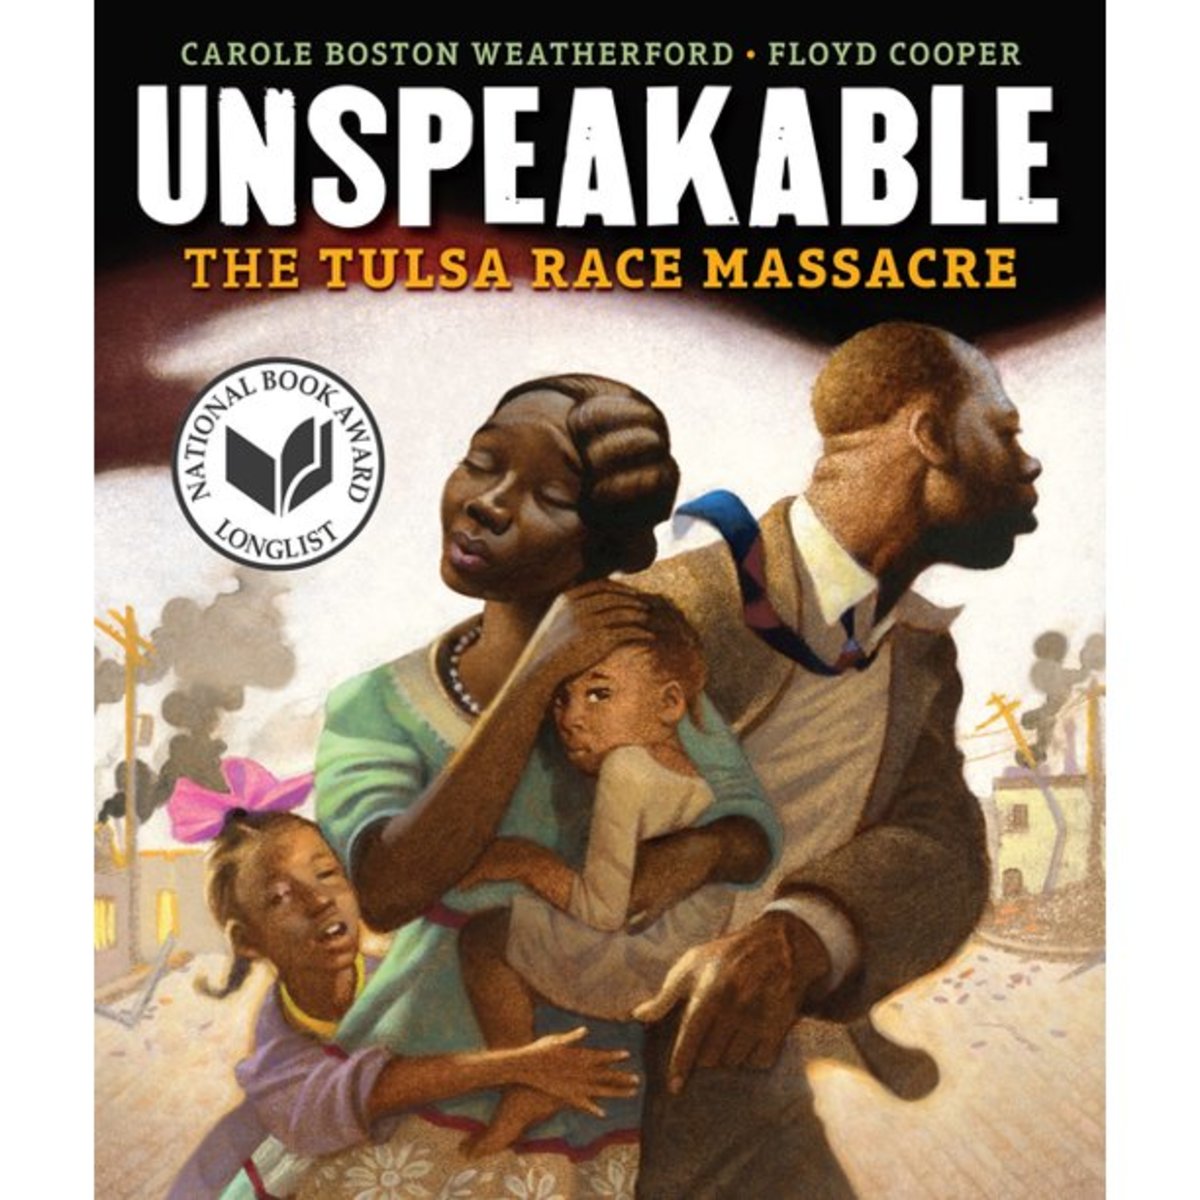 Unspeakable: the Tulsa Race Massacre by Carole Boston Weatherford 